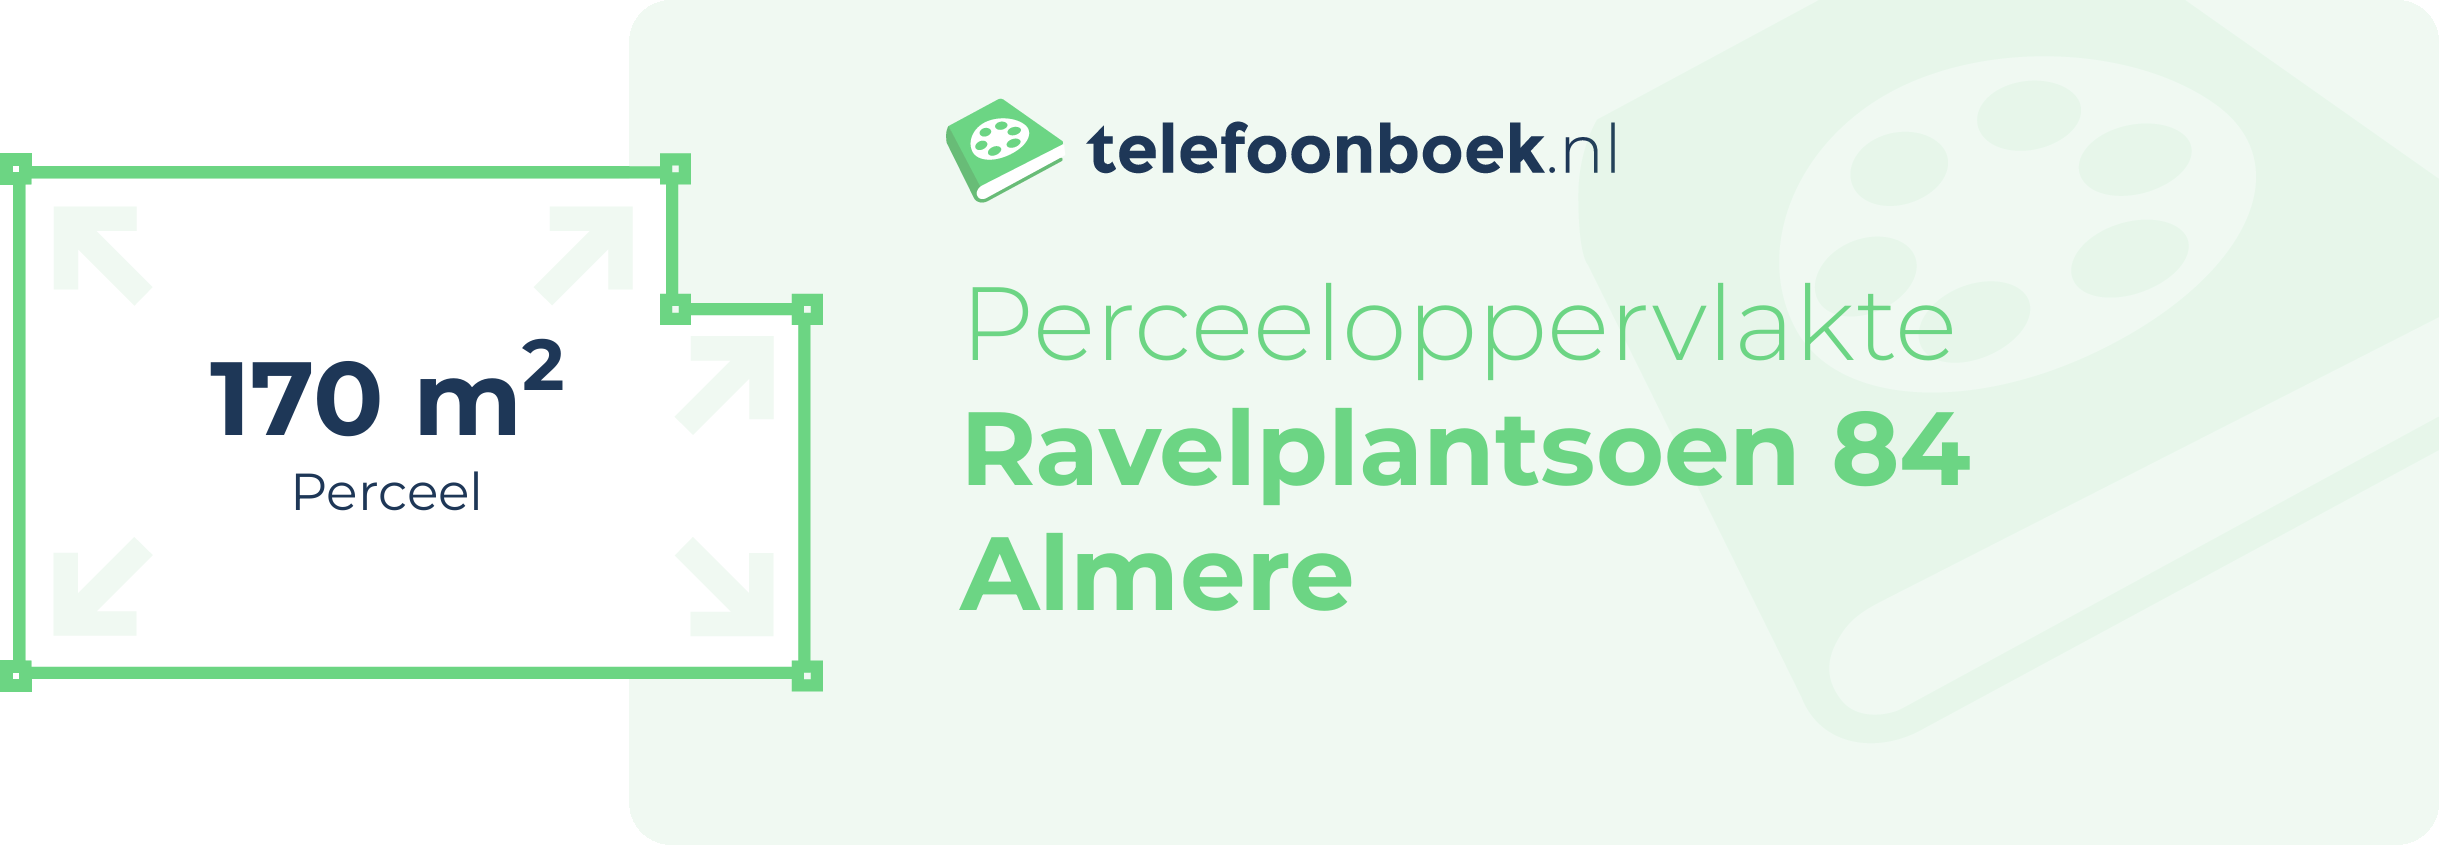 Perceeloppervlakte Ravelplantsoen 84 Almere